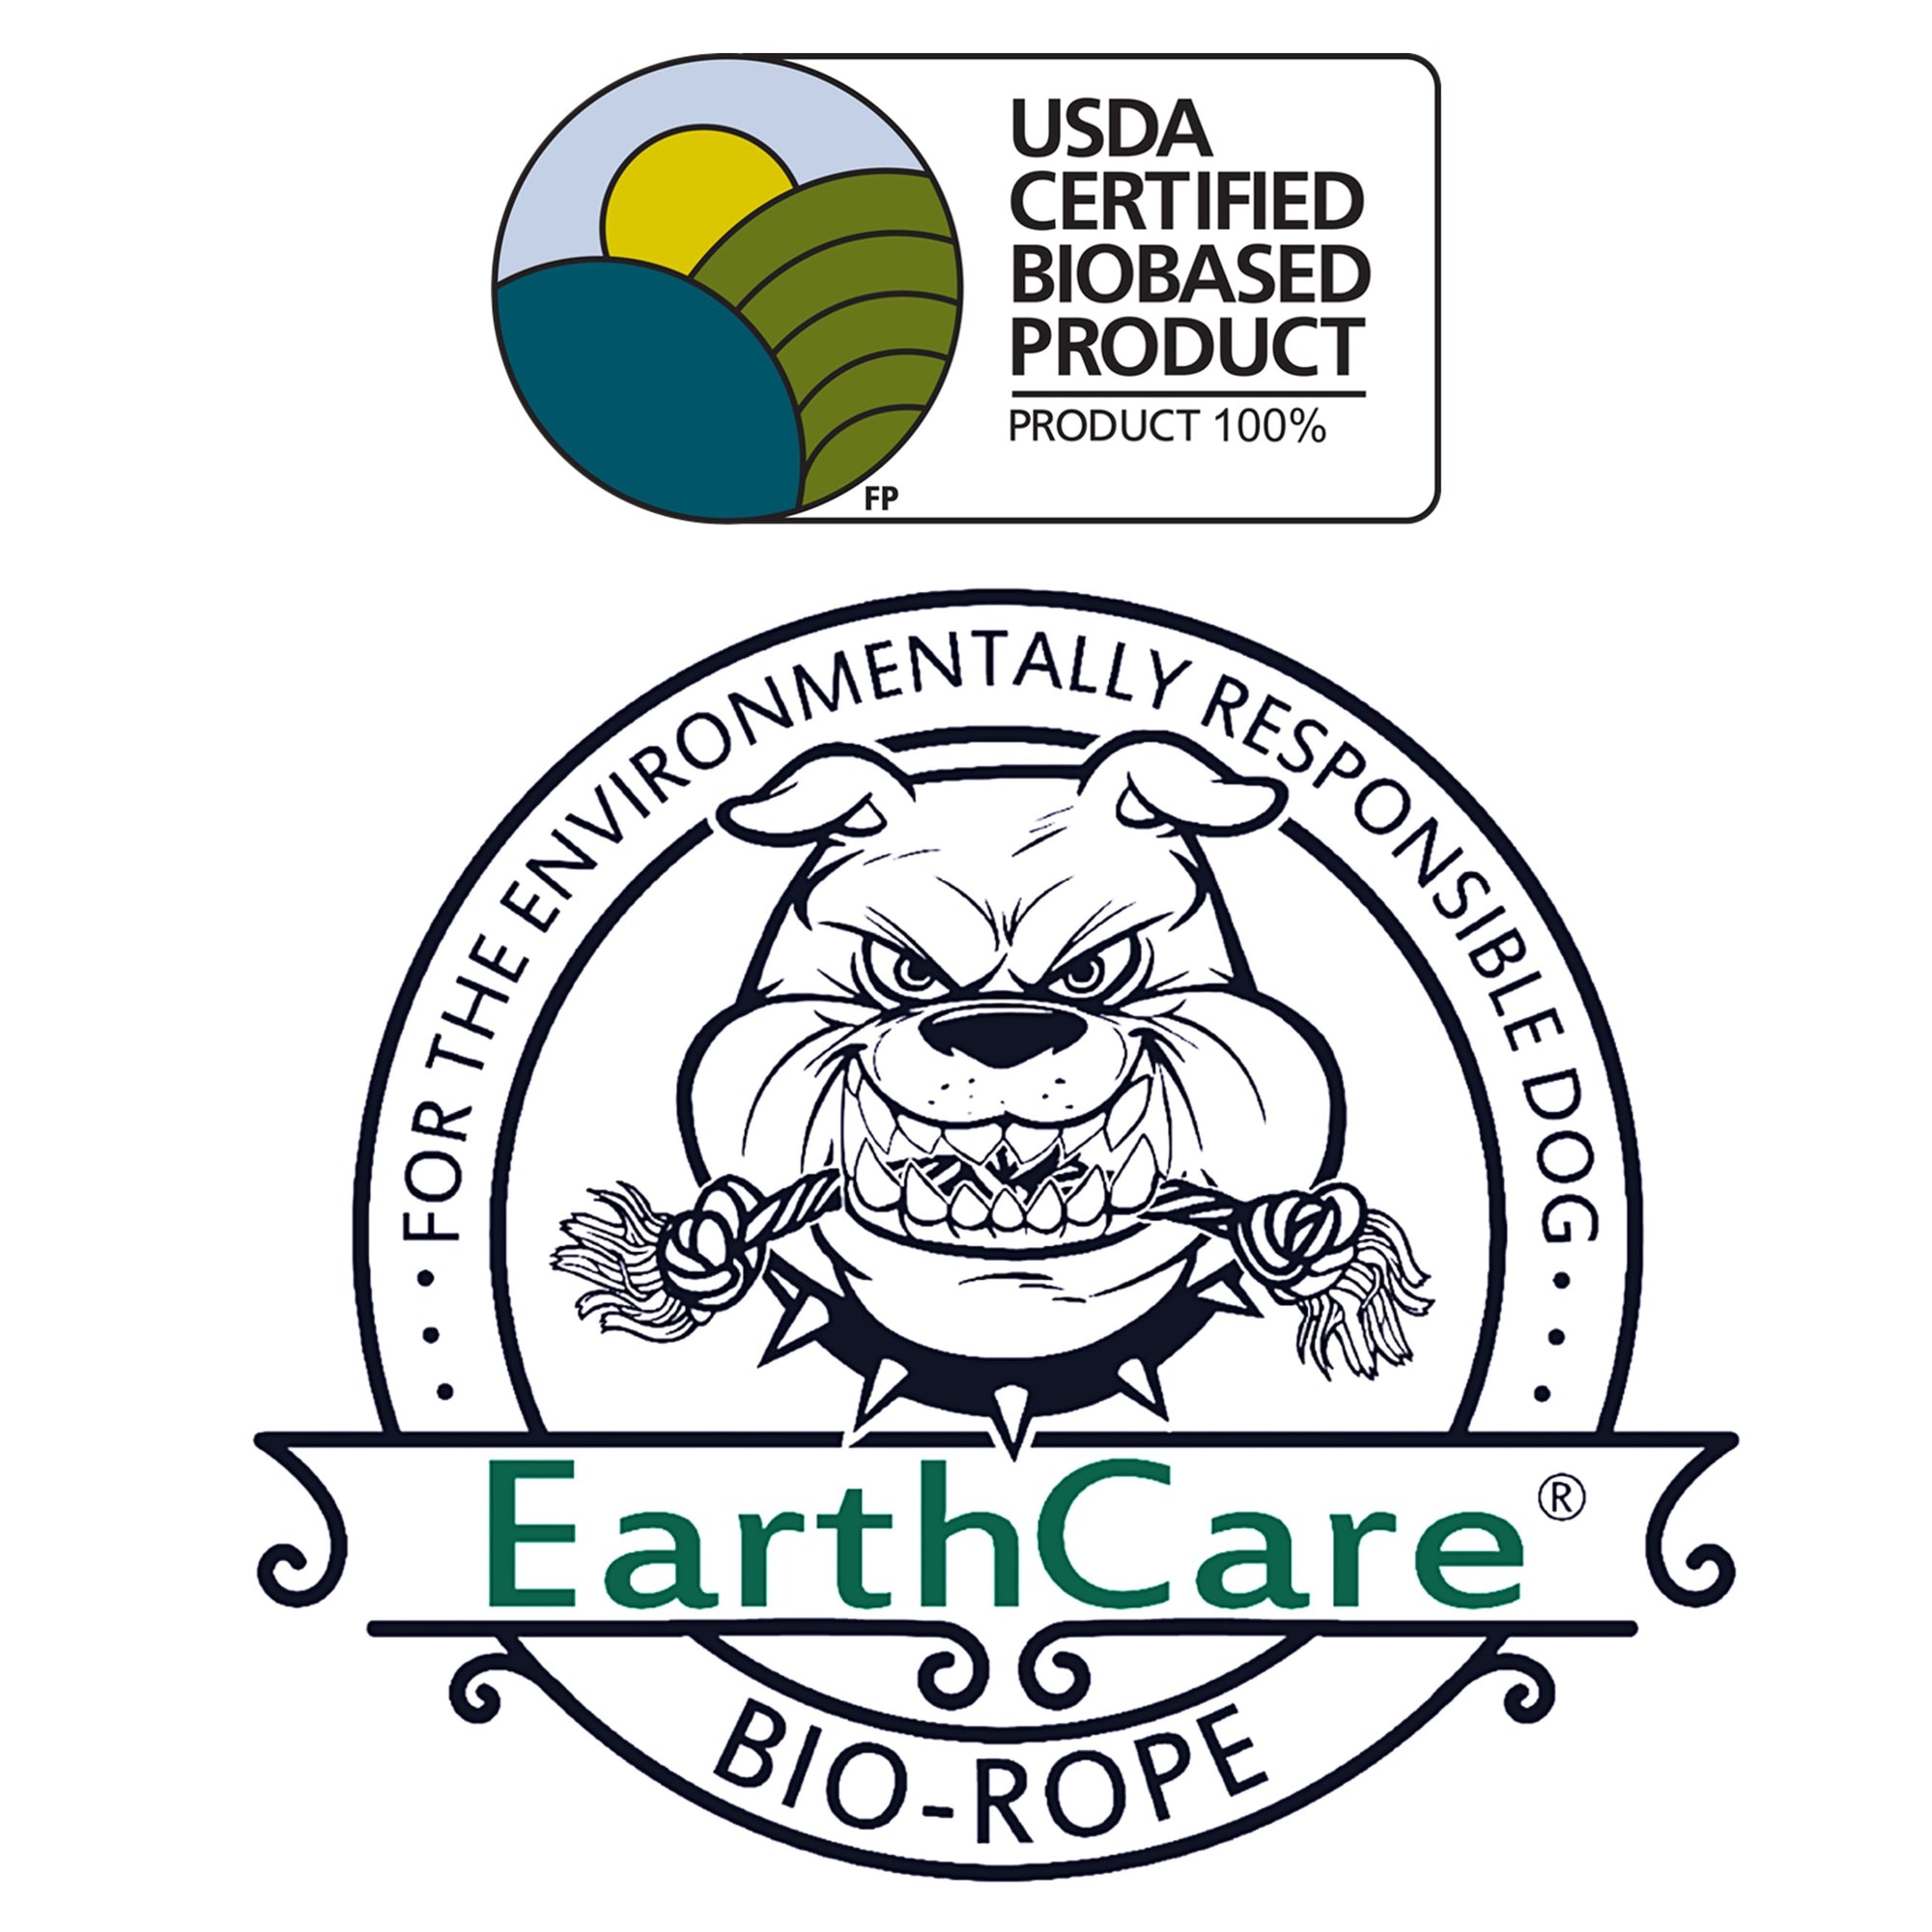 EarthCare Bio-Rope USDA 100 Biobased Certified